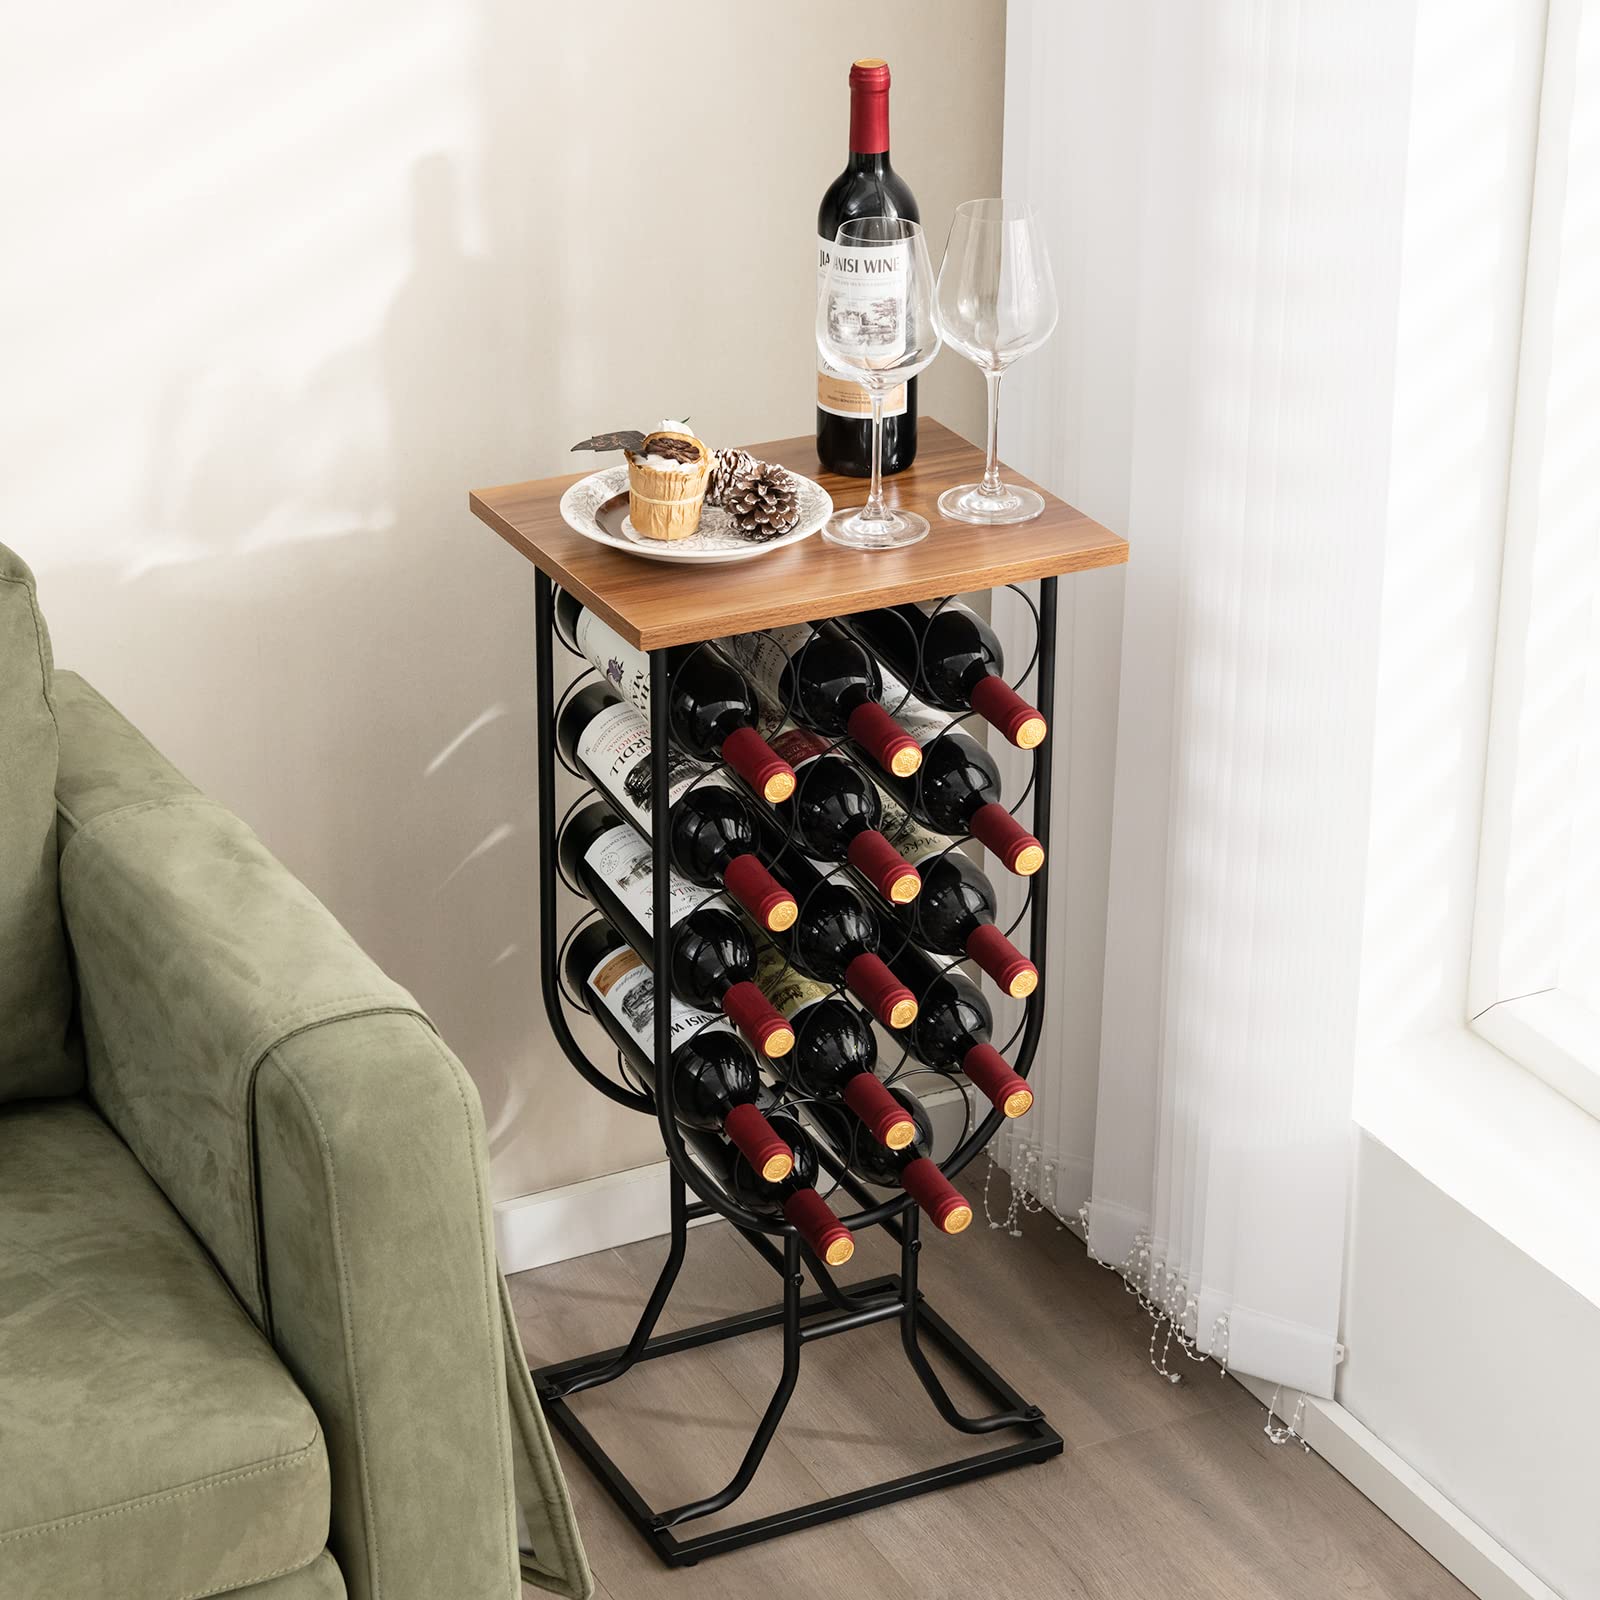 Giantex 14-Bottle Wine Rack Freestanding Floor - 30" Standing Wine Rack with Detachable and Lockable Wheels, Vertical Wine Holder Stand, Metal Wine Storage Racks with Wooden Top for Living Room, Black